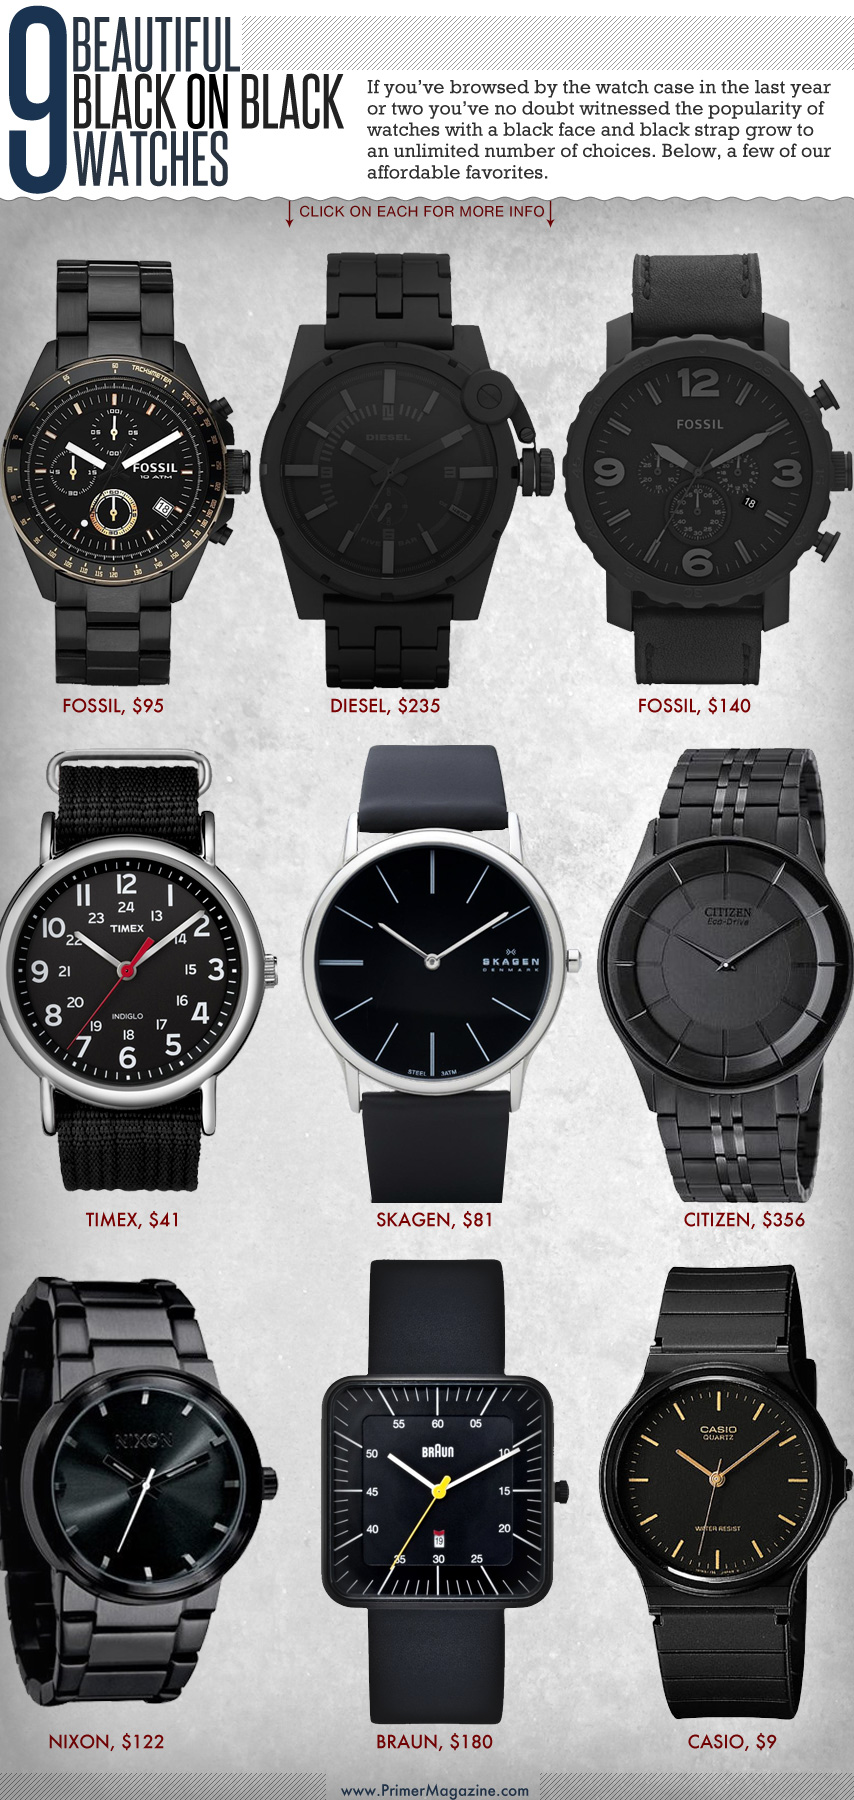 9 Beautiful Black on Black Watches | Primer